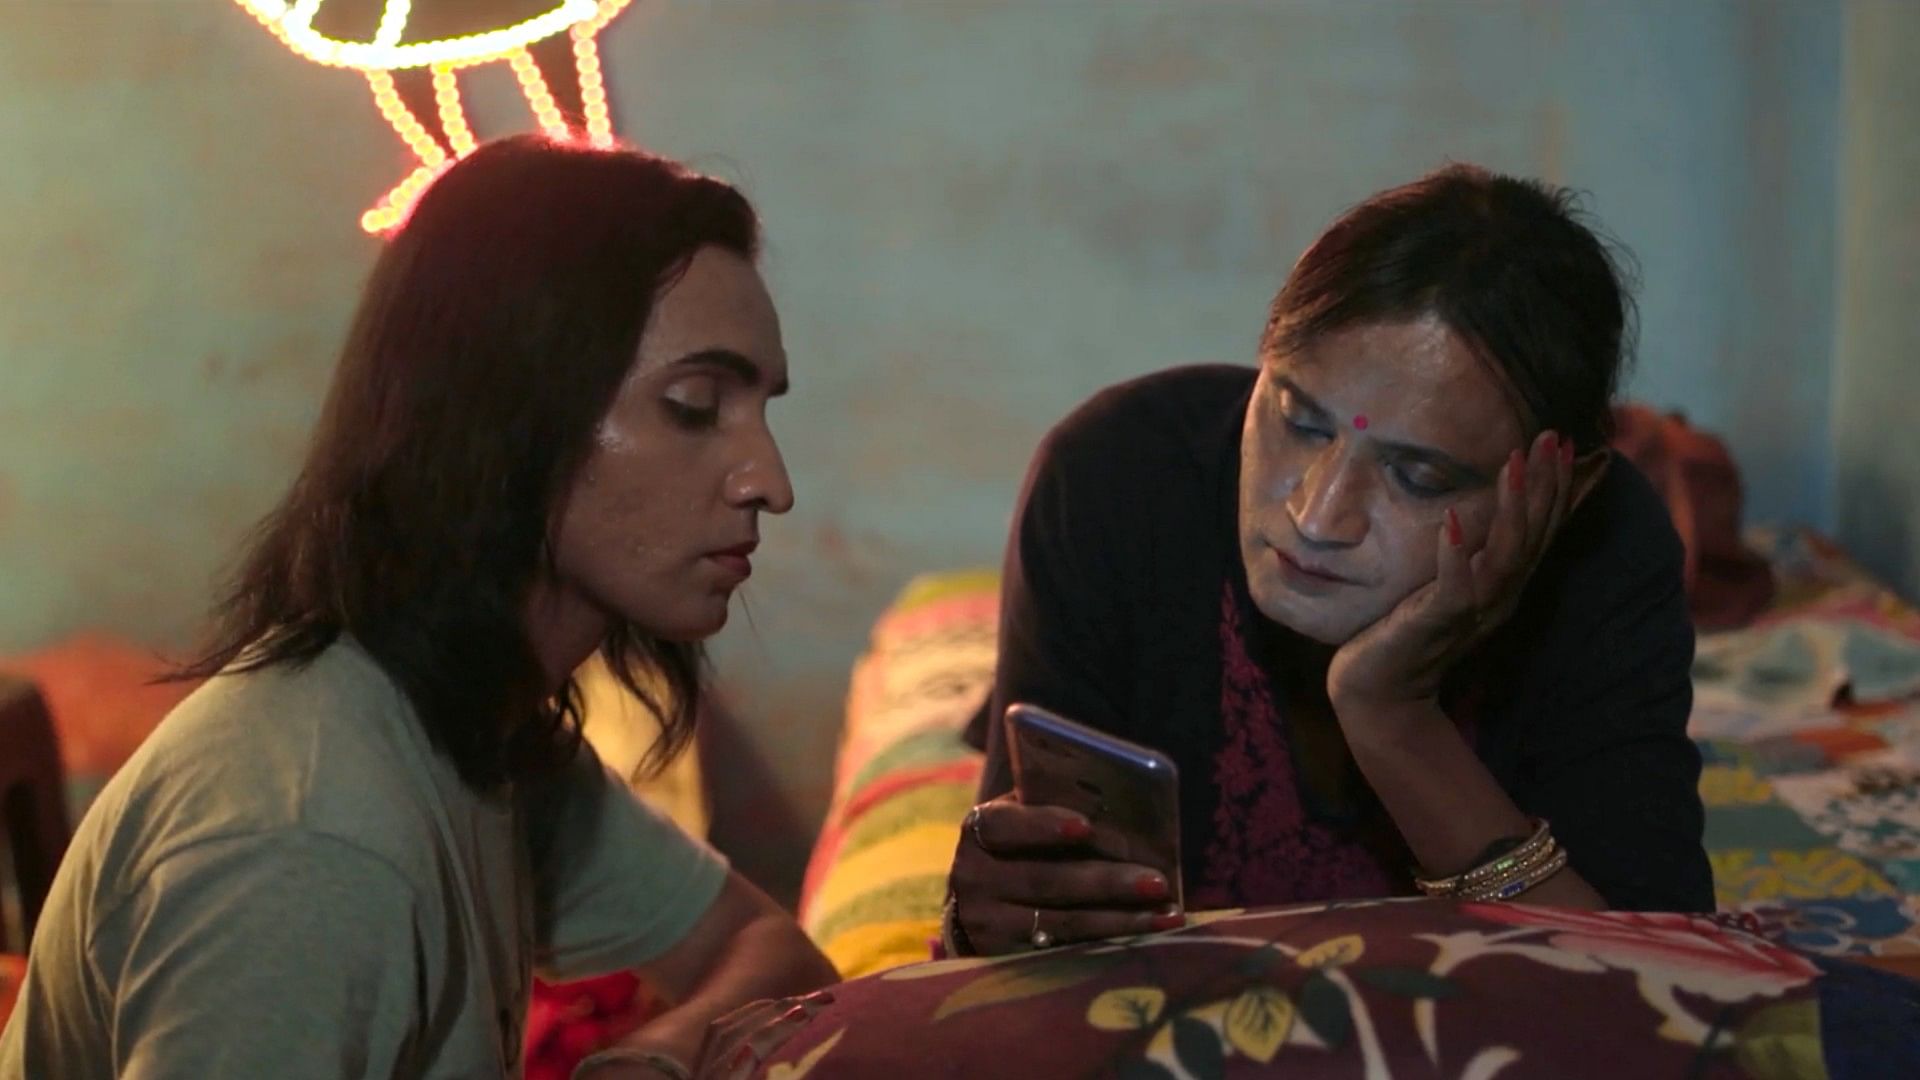 <div class="paragraphs"><p>Indian Trans Film 'Ek Jagah Apni' Makes A Mark On Global Audiences </p></div>